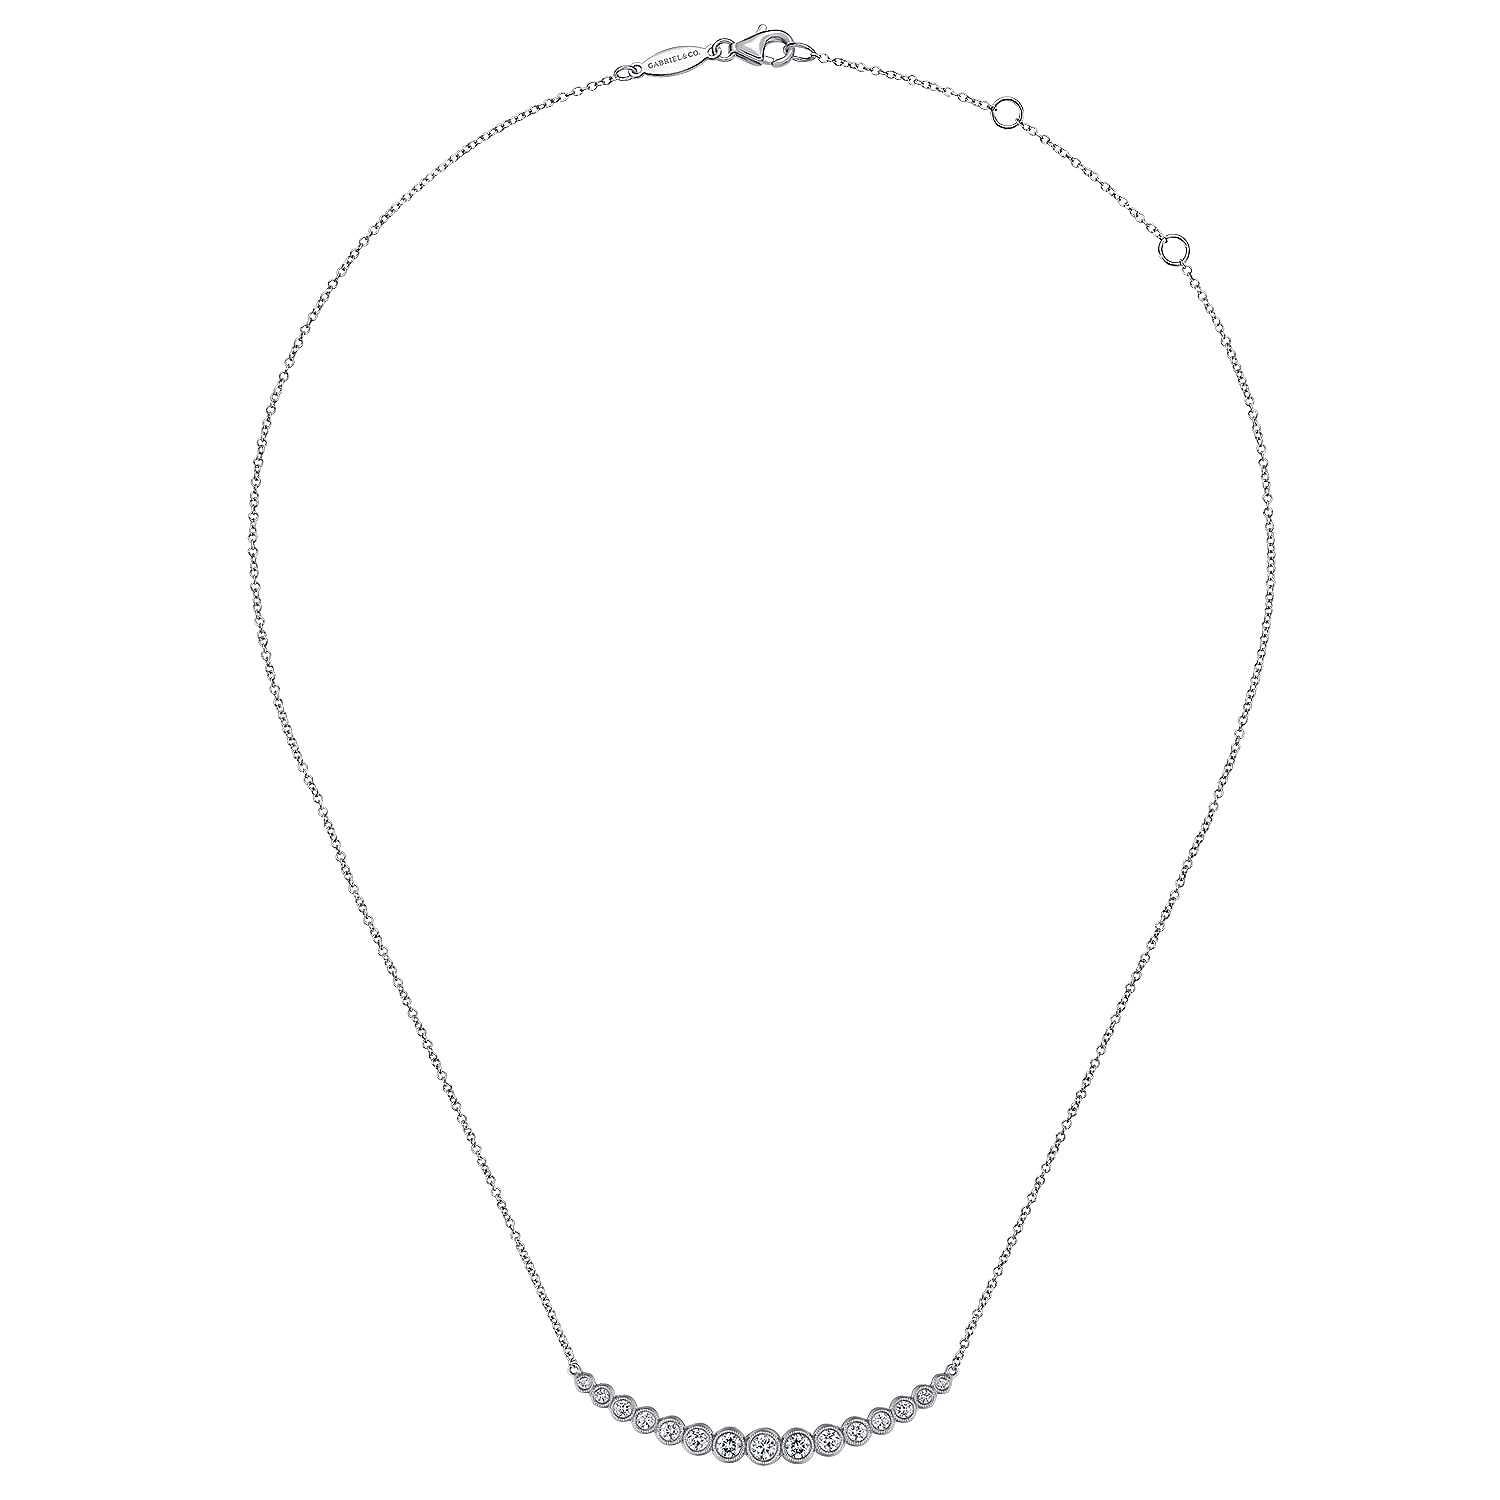 14K White Gold Curved Bar Necklace with Bezel Set Round Diamonds